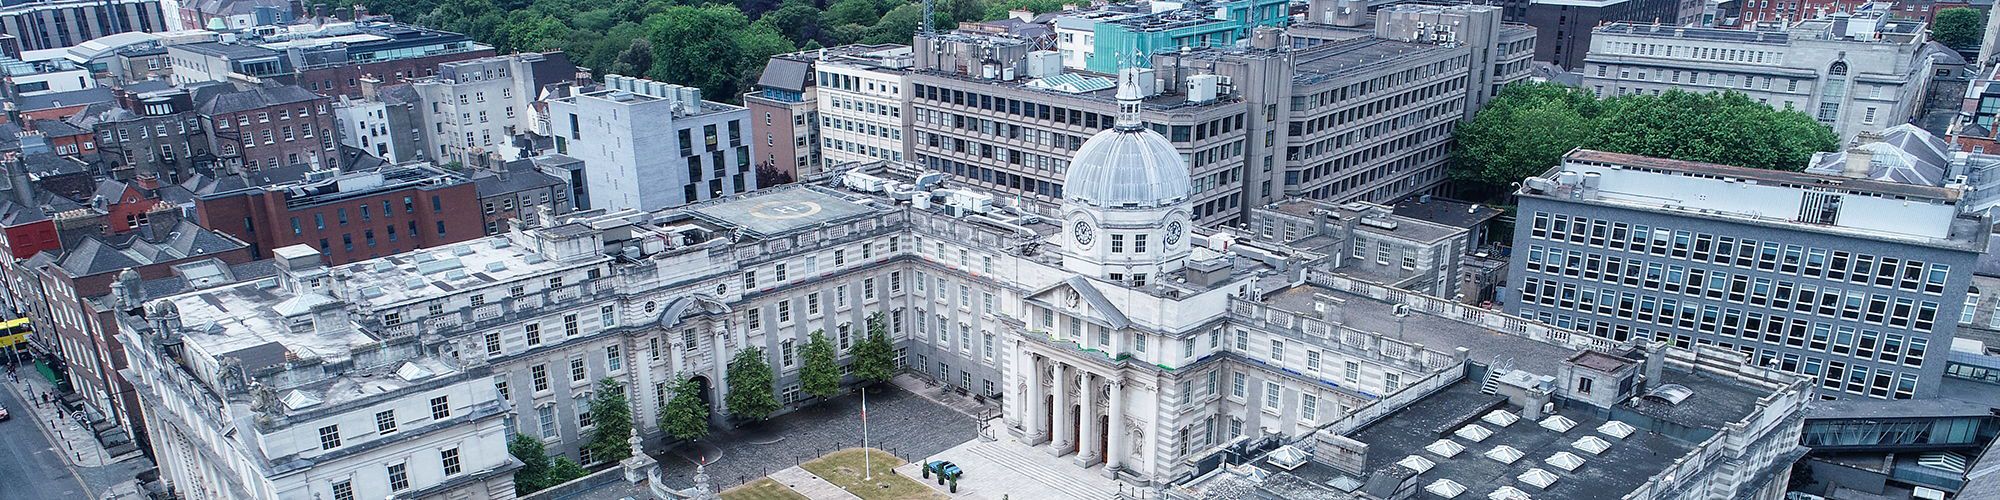 Ireland - Government buildings